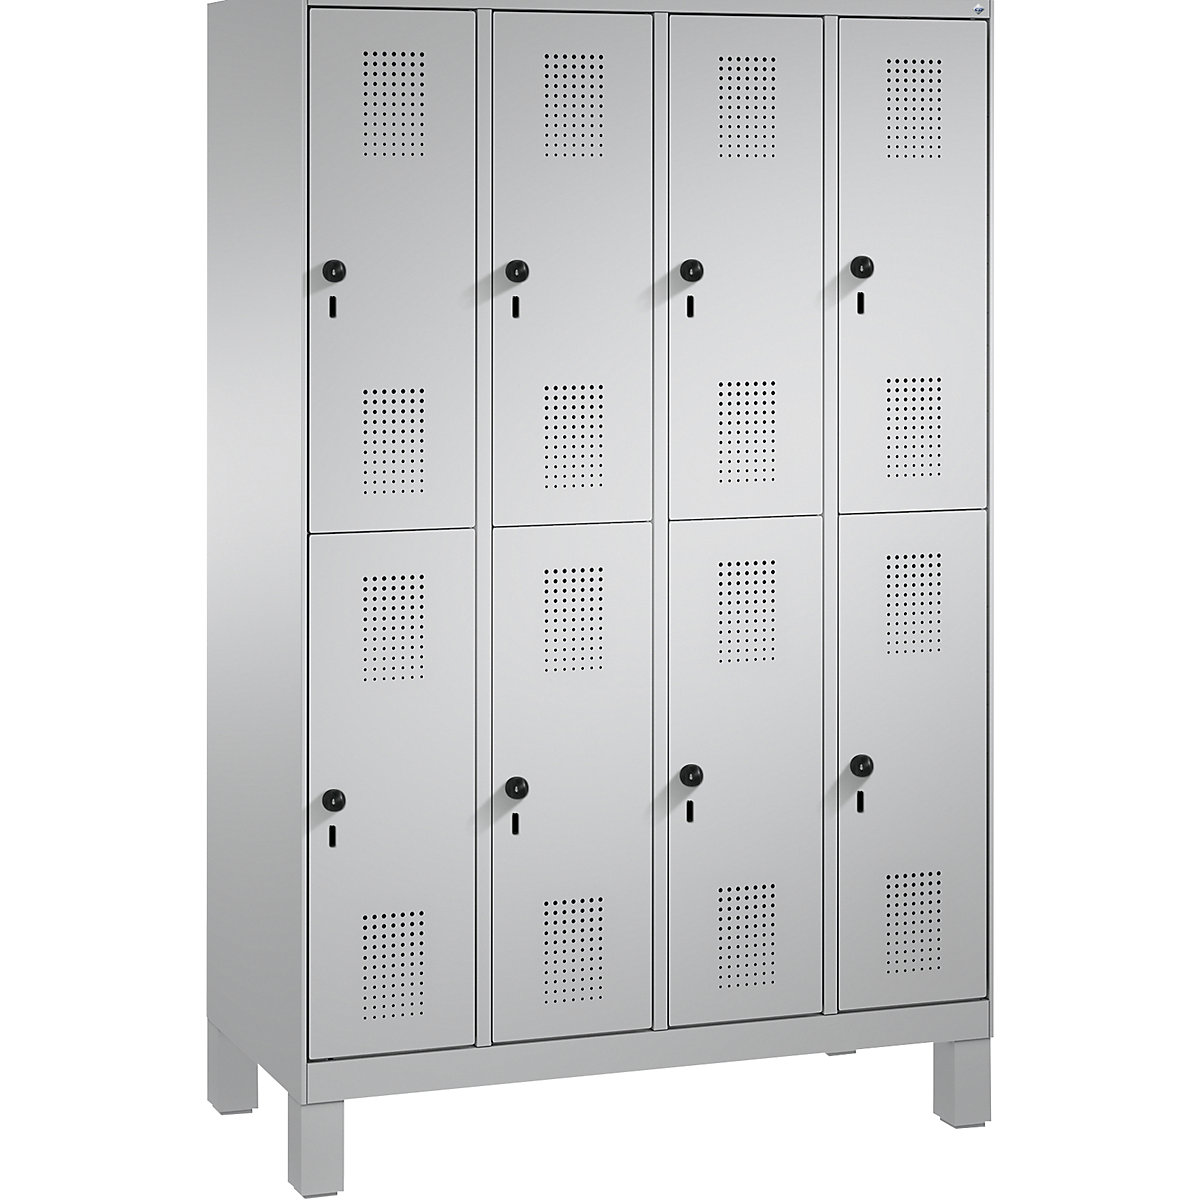 EVOLO cloakroom locker, double tier, with feet – C+P, 4 compartments, 2 shelf compartments each, compartment width 300 mm, white aluminium / white aluminium-6